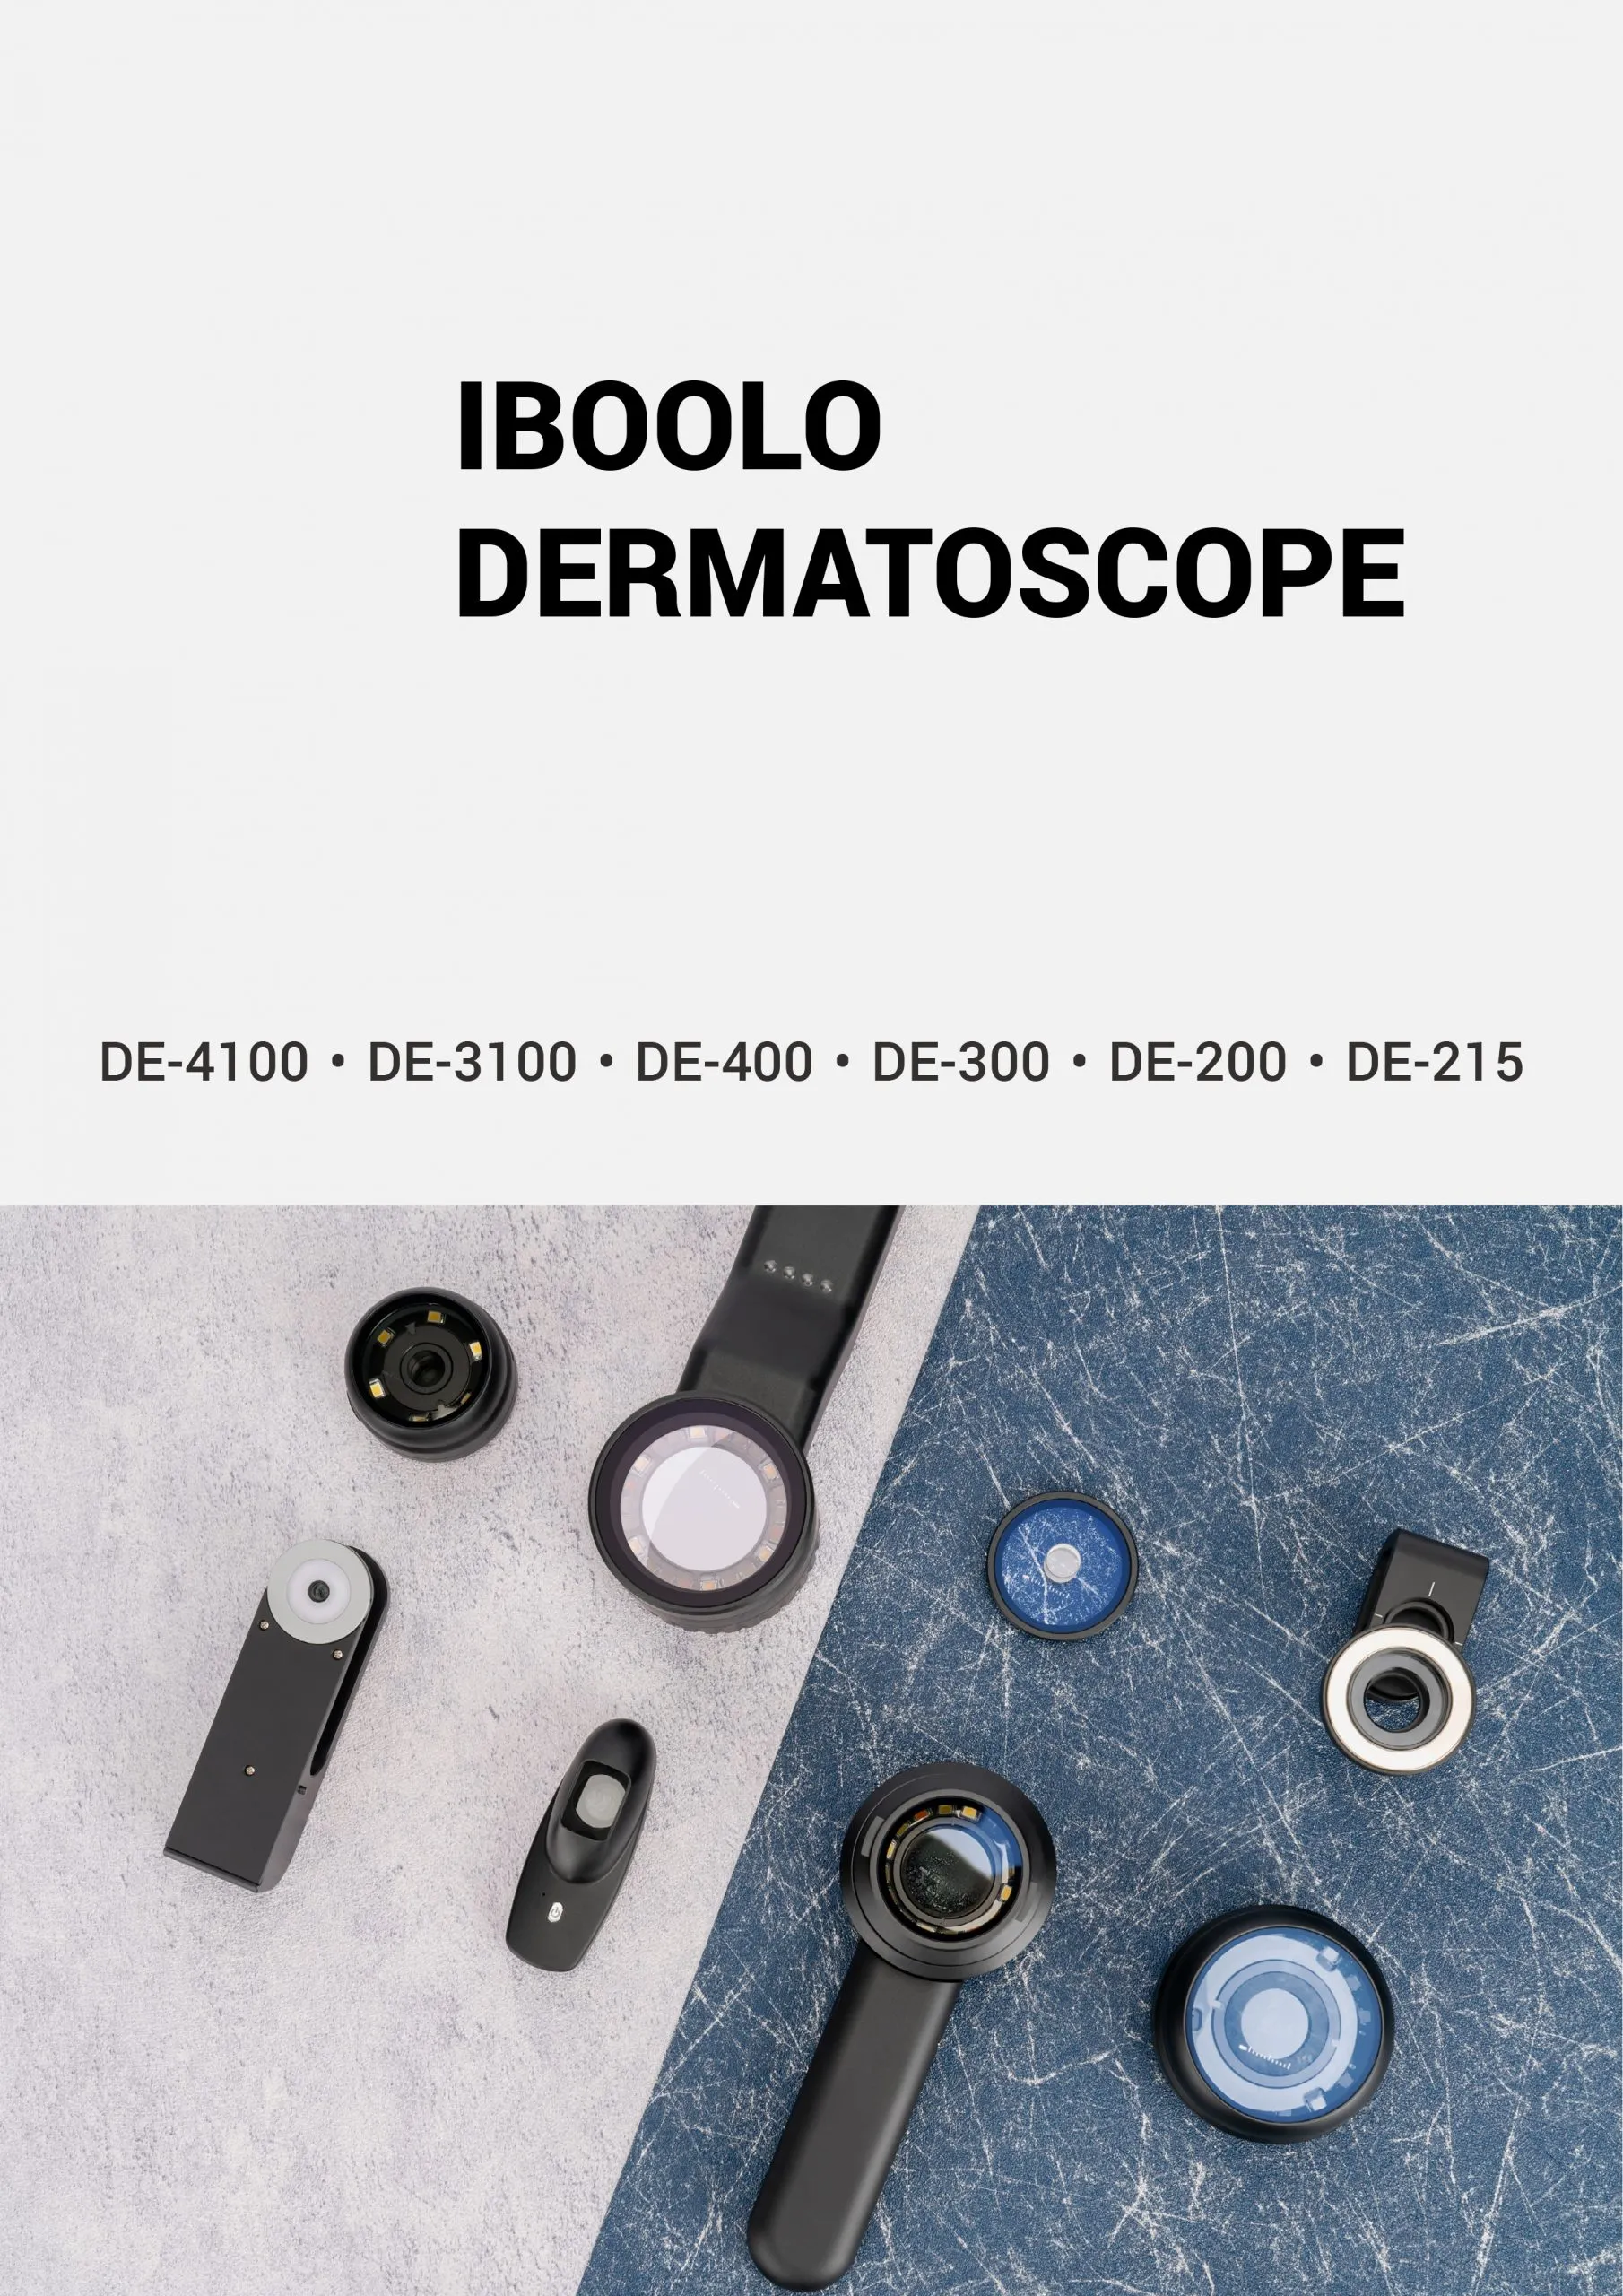 China customized dermatoscopio precio products supply